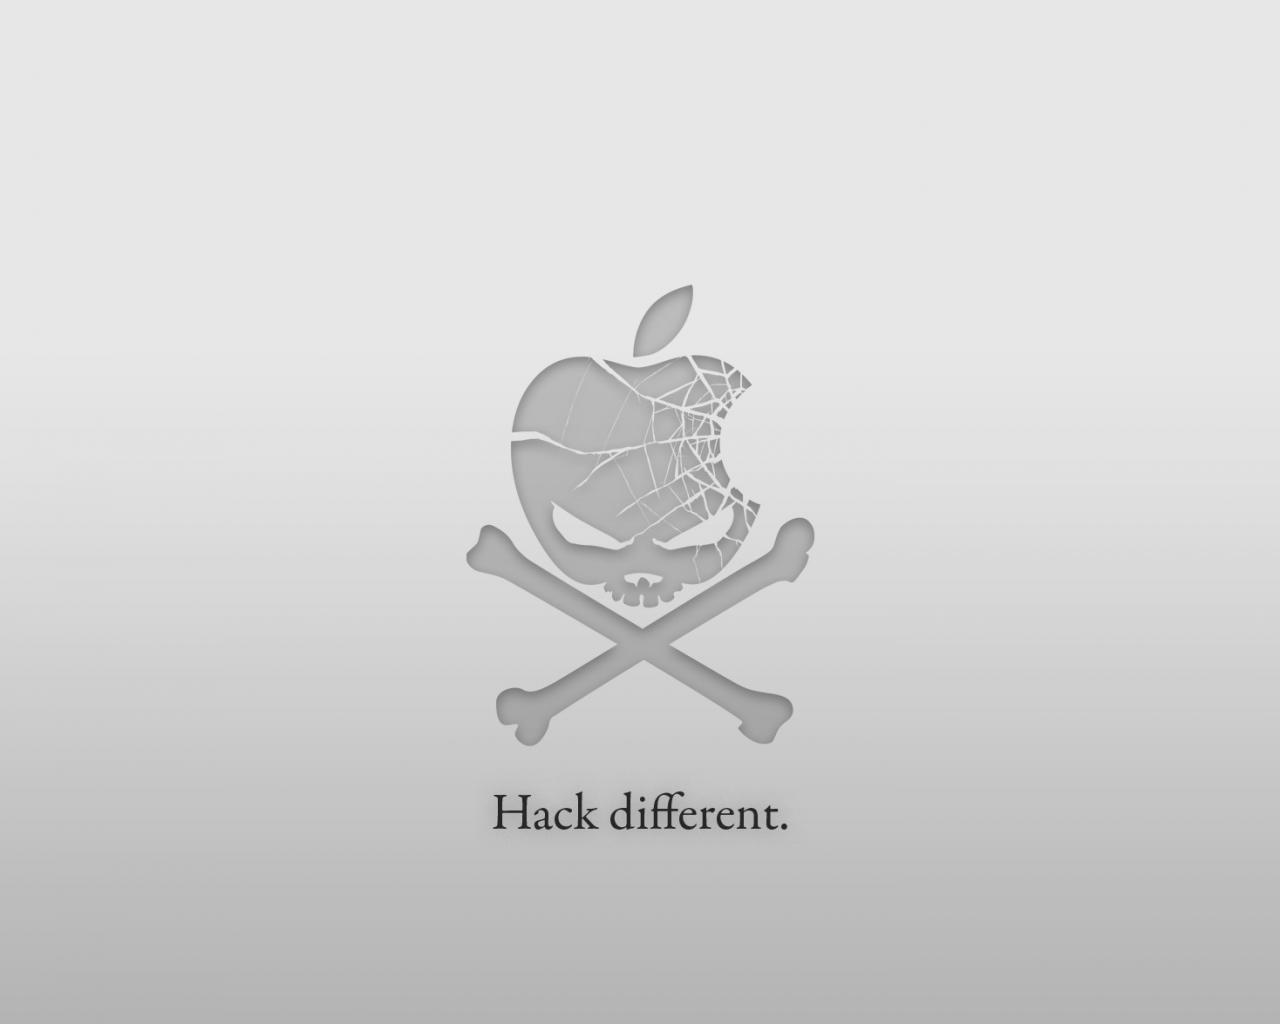 hackers, Anonymous, Skull and bones, Apple Inc. Wallpaper